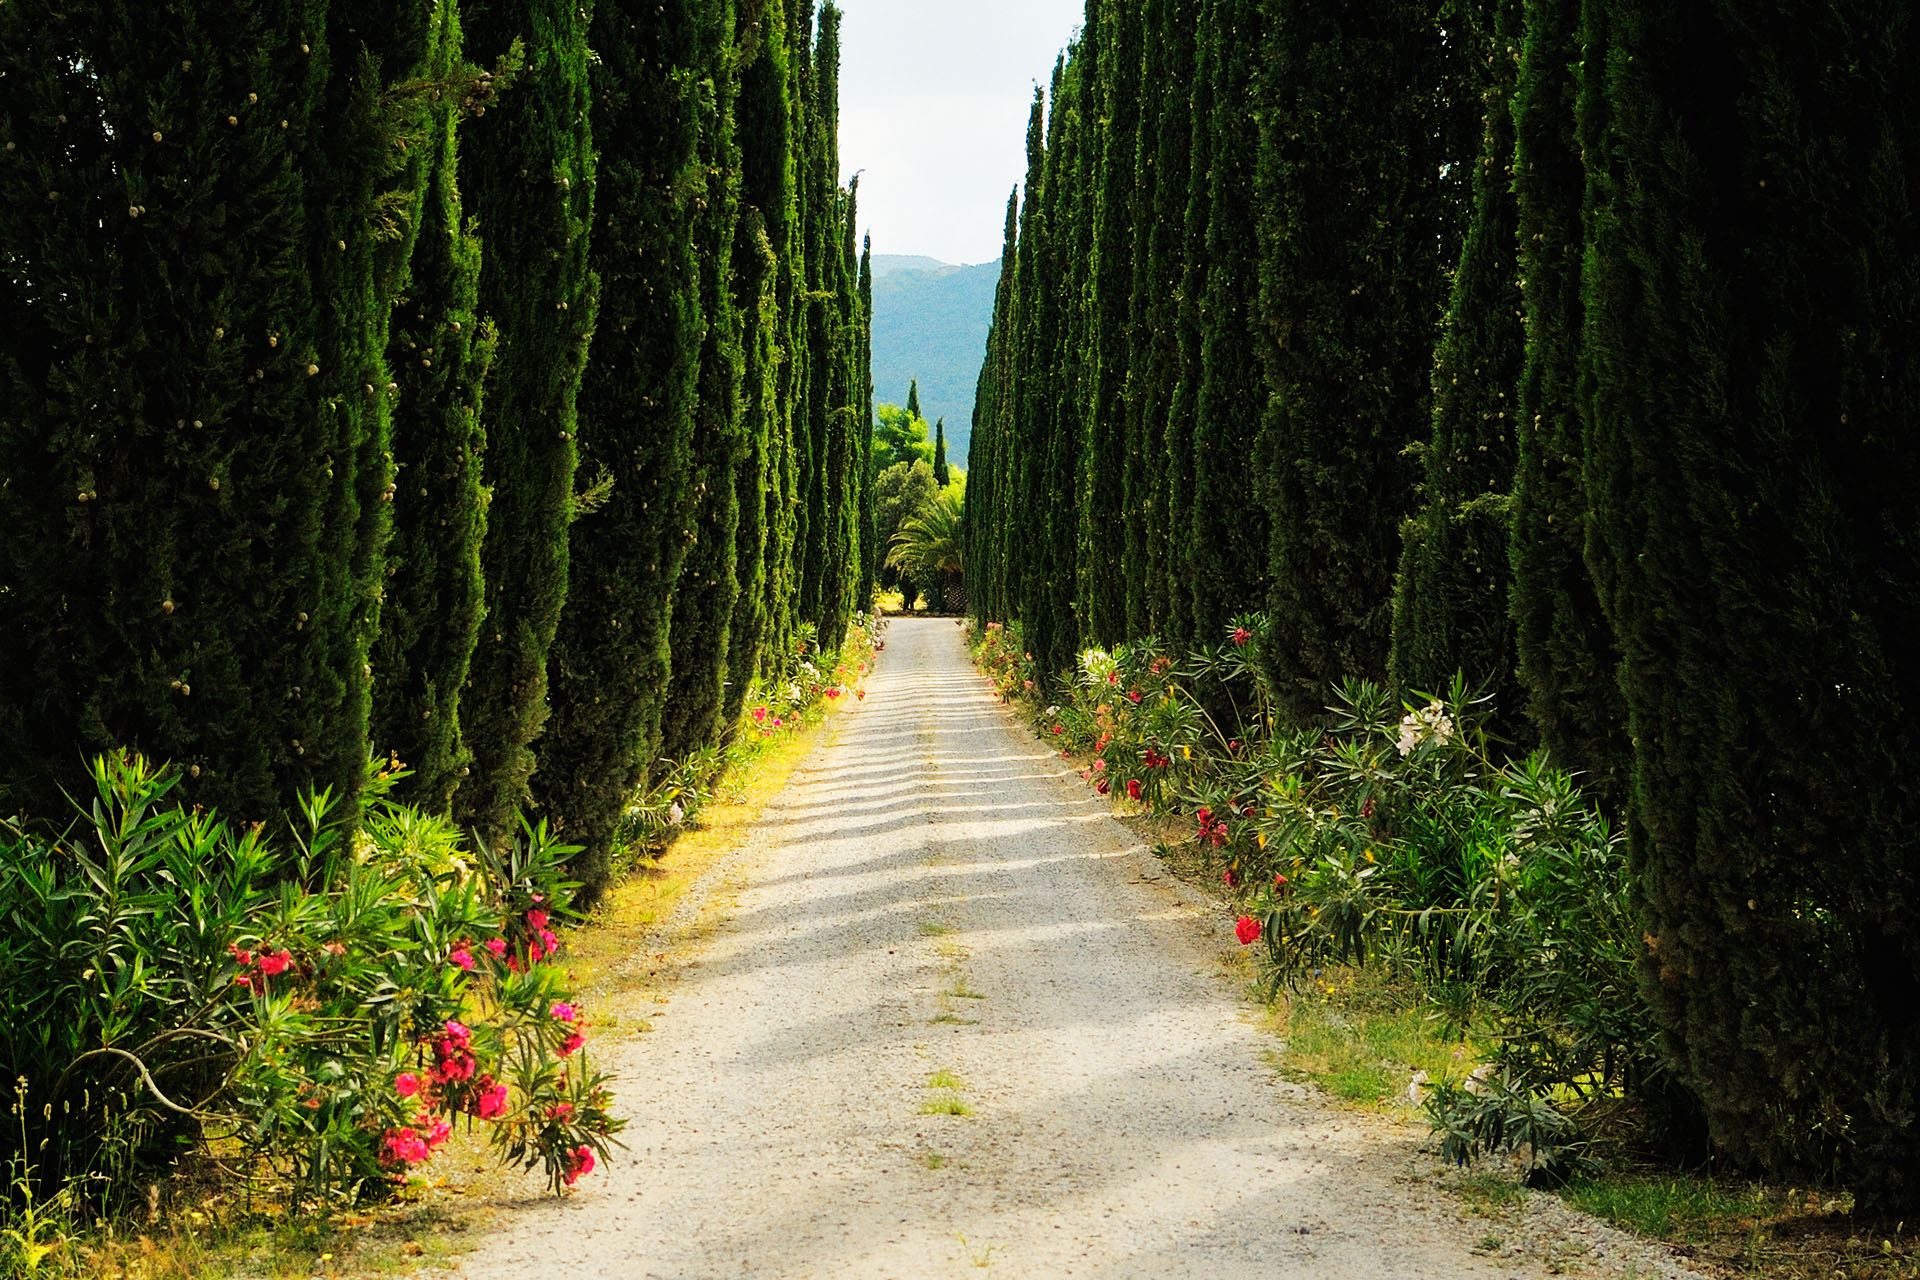 Cypress road in Bolgheri